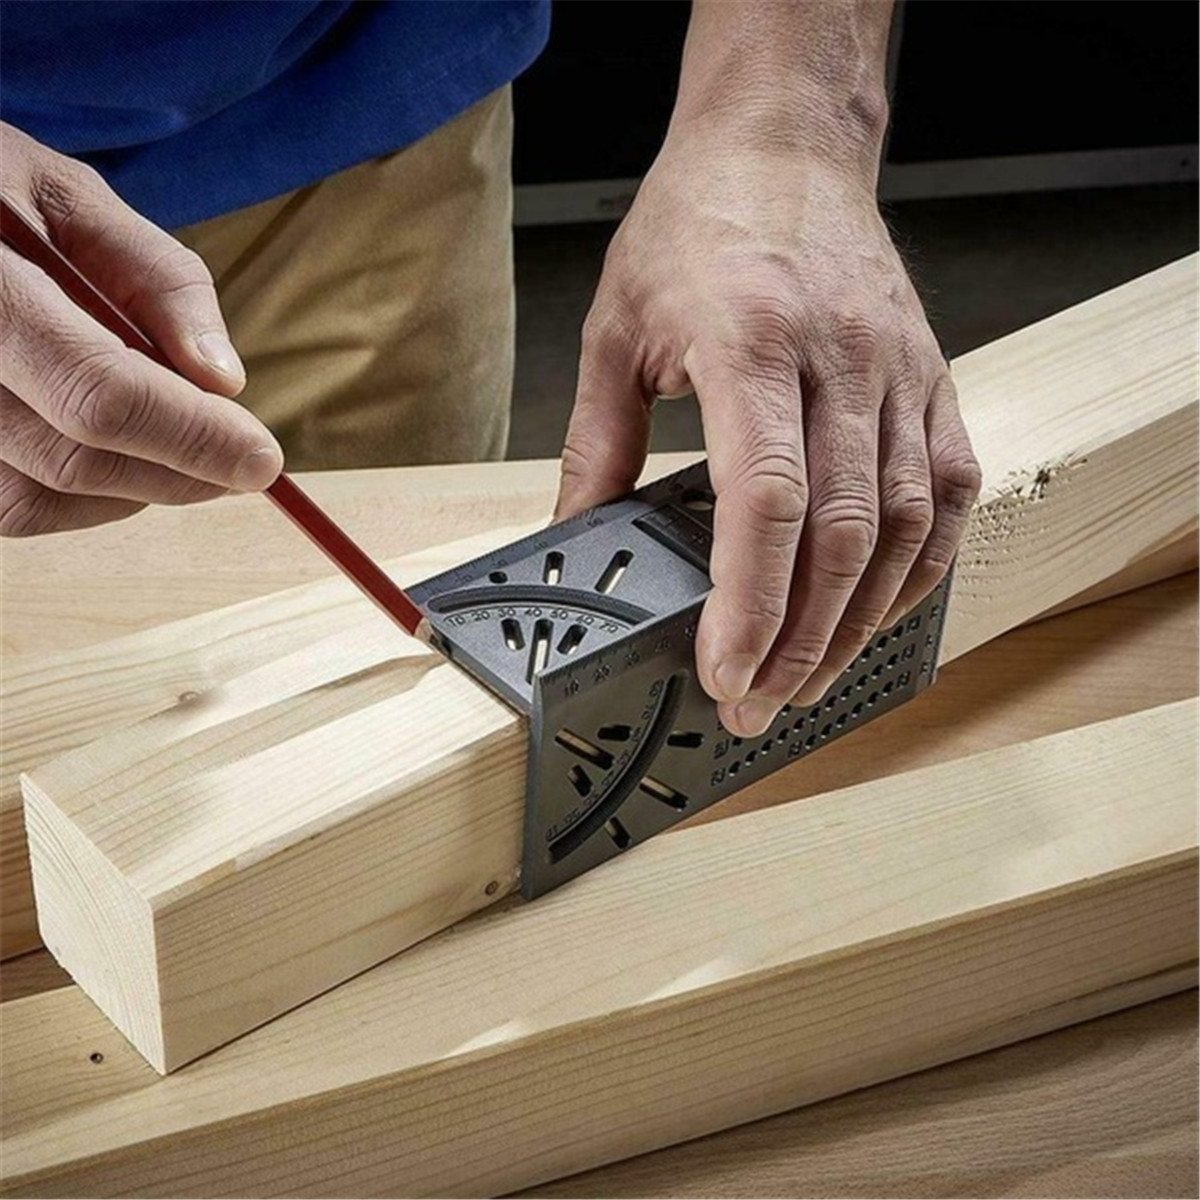 Woodworking-Scribe-Mark-Line-Gauge-100mm-T-type-Ruler-Hole-Scribing-Gauge-Aluminum-Crossed-out-Ruler-1587221-6